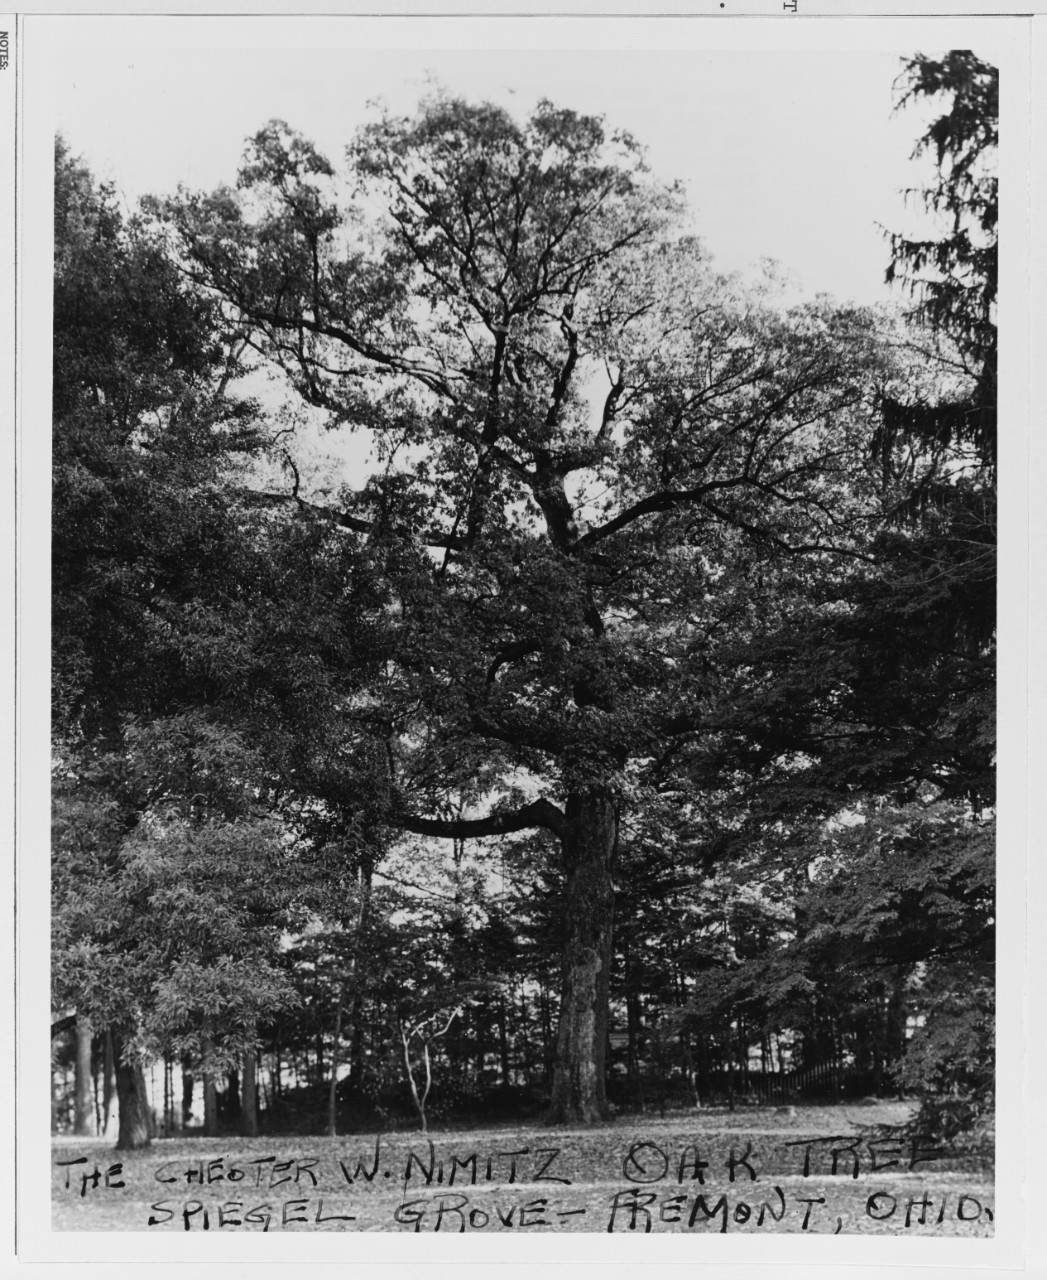 "Chester W. Nimitz Oak Tree," Spiegel Grove, Fremont, Ohio